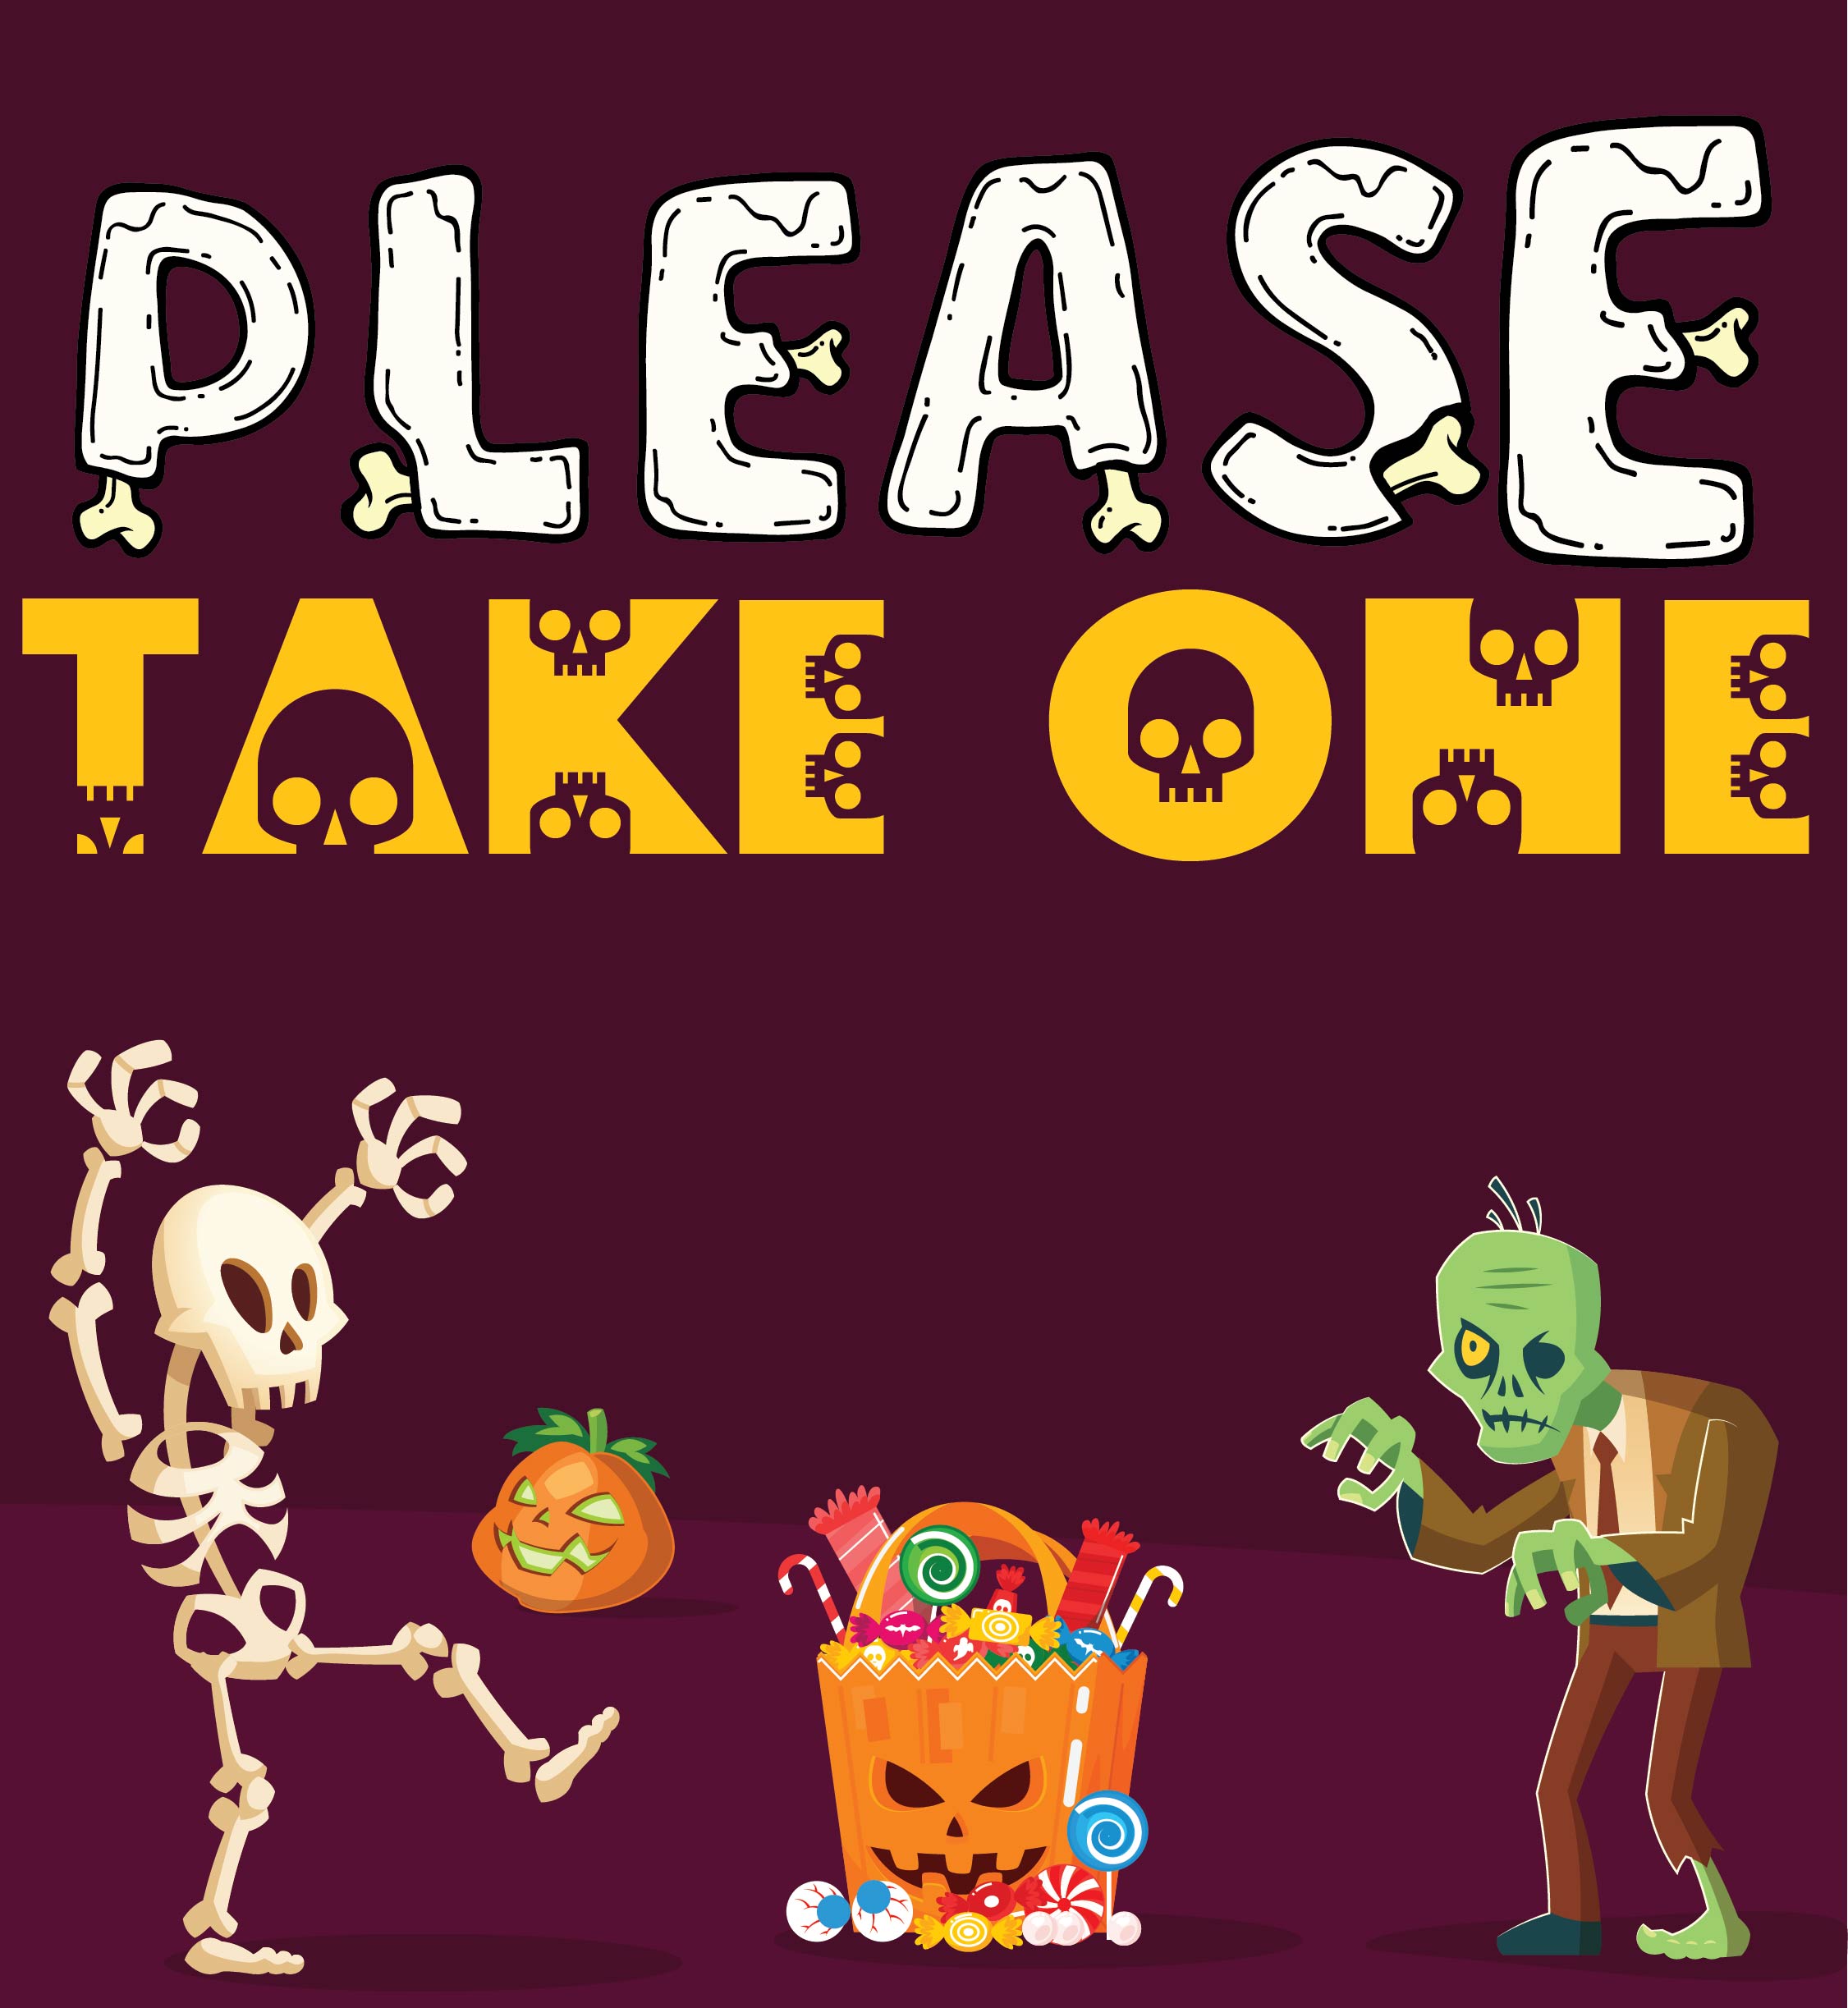 Halloween Take One Candy Sign Printable